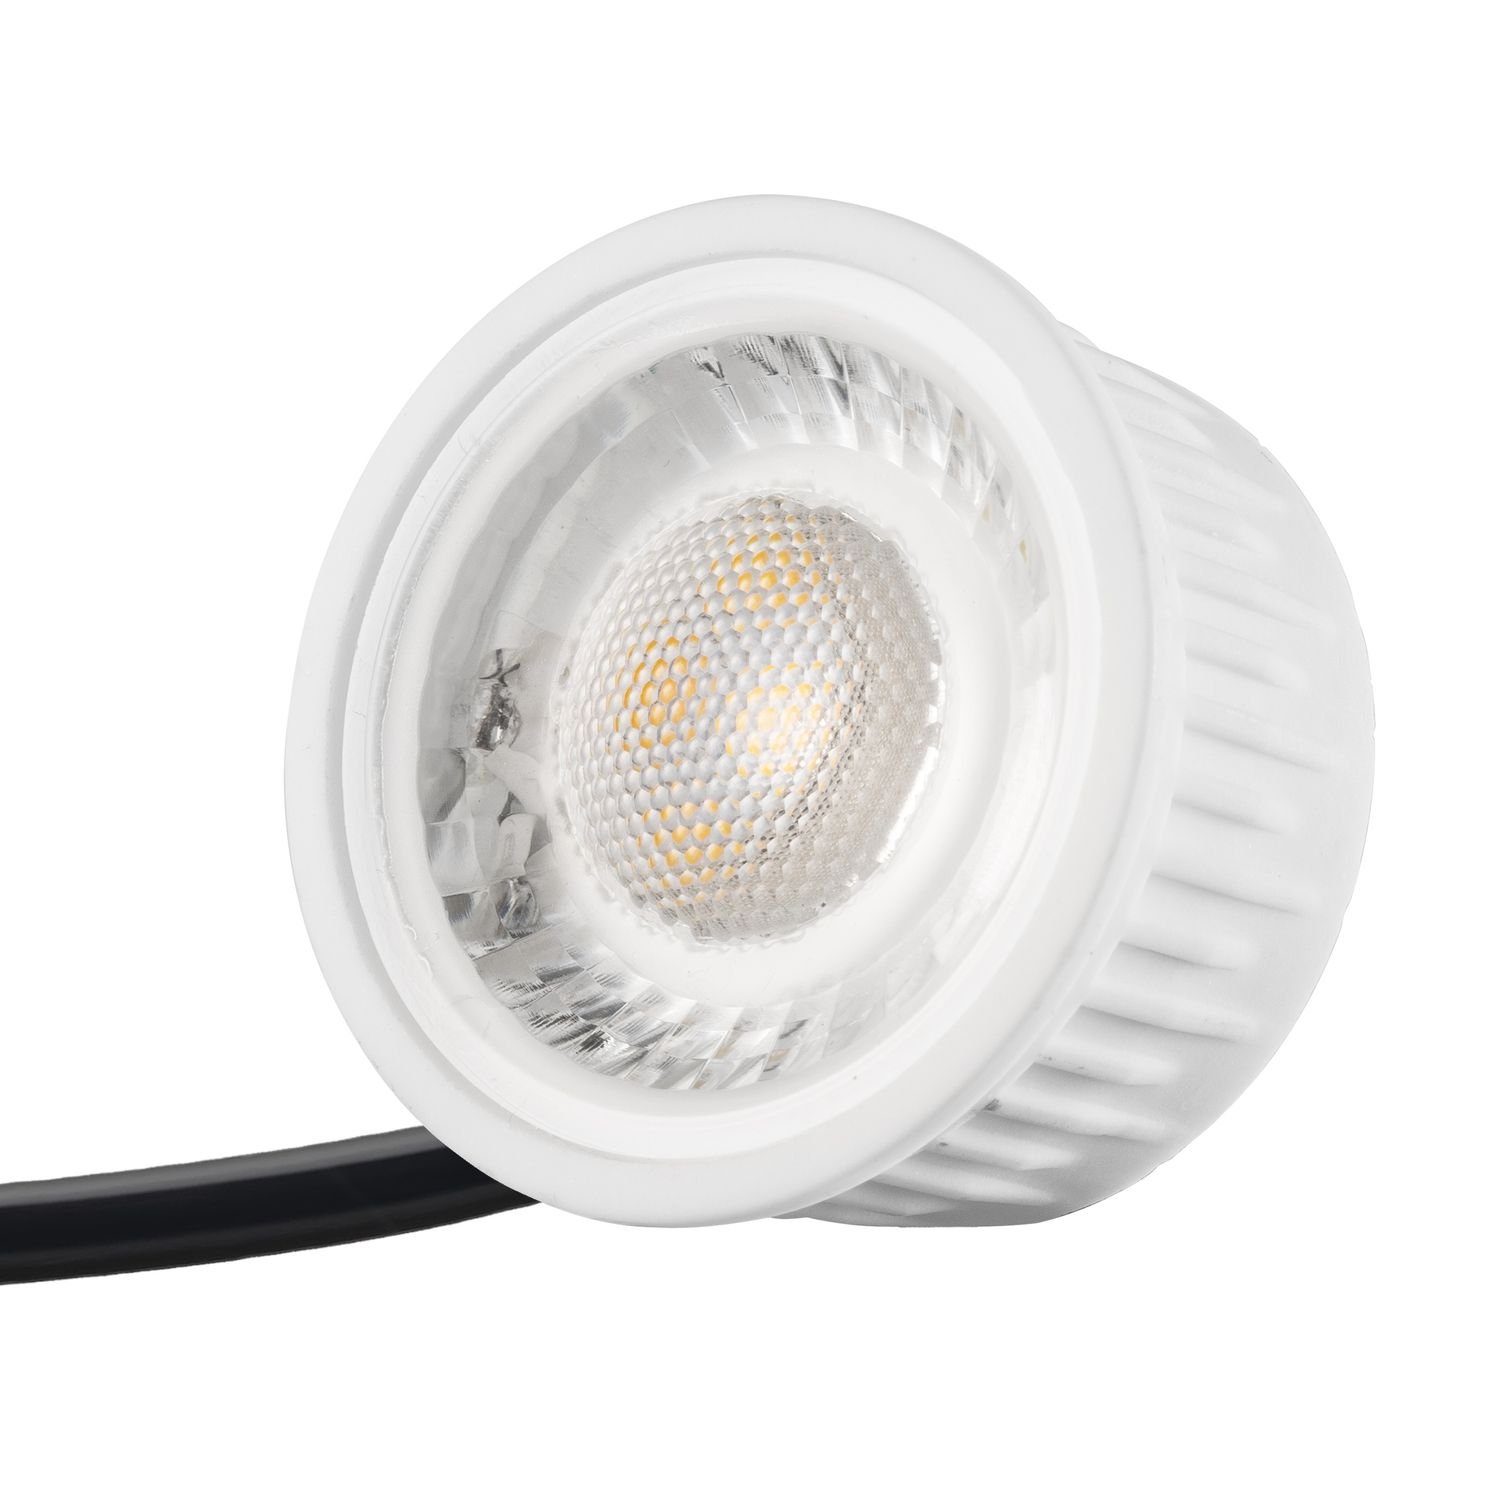 Set in mit weiß IP44 LEDANDO extra Einbaustrahler vo LED flach Einbaustrahler 5W LED Leuchtmittel